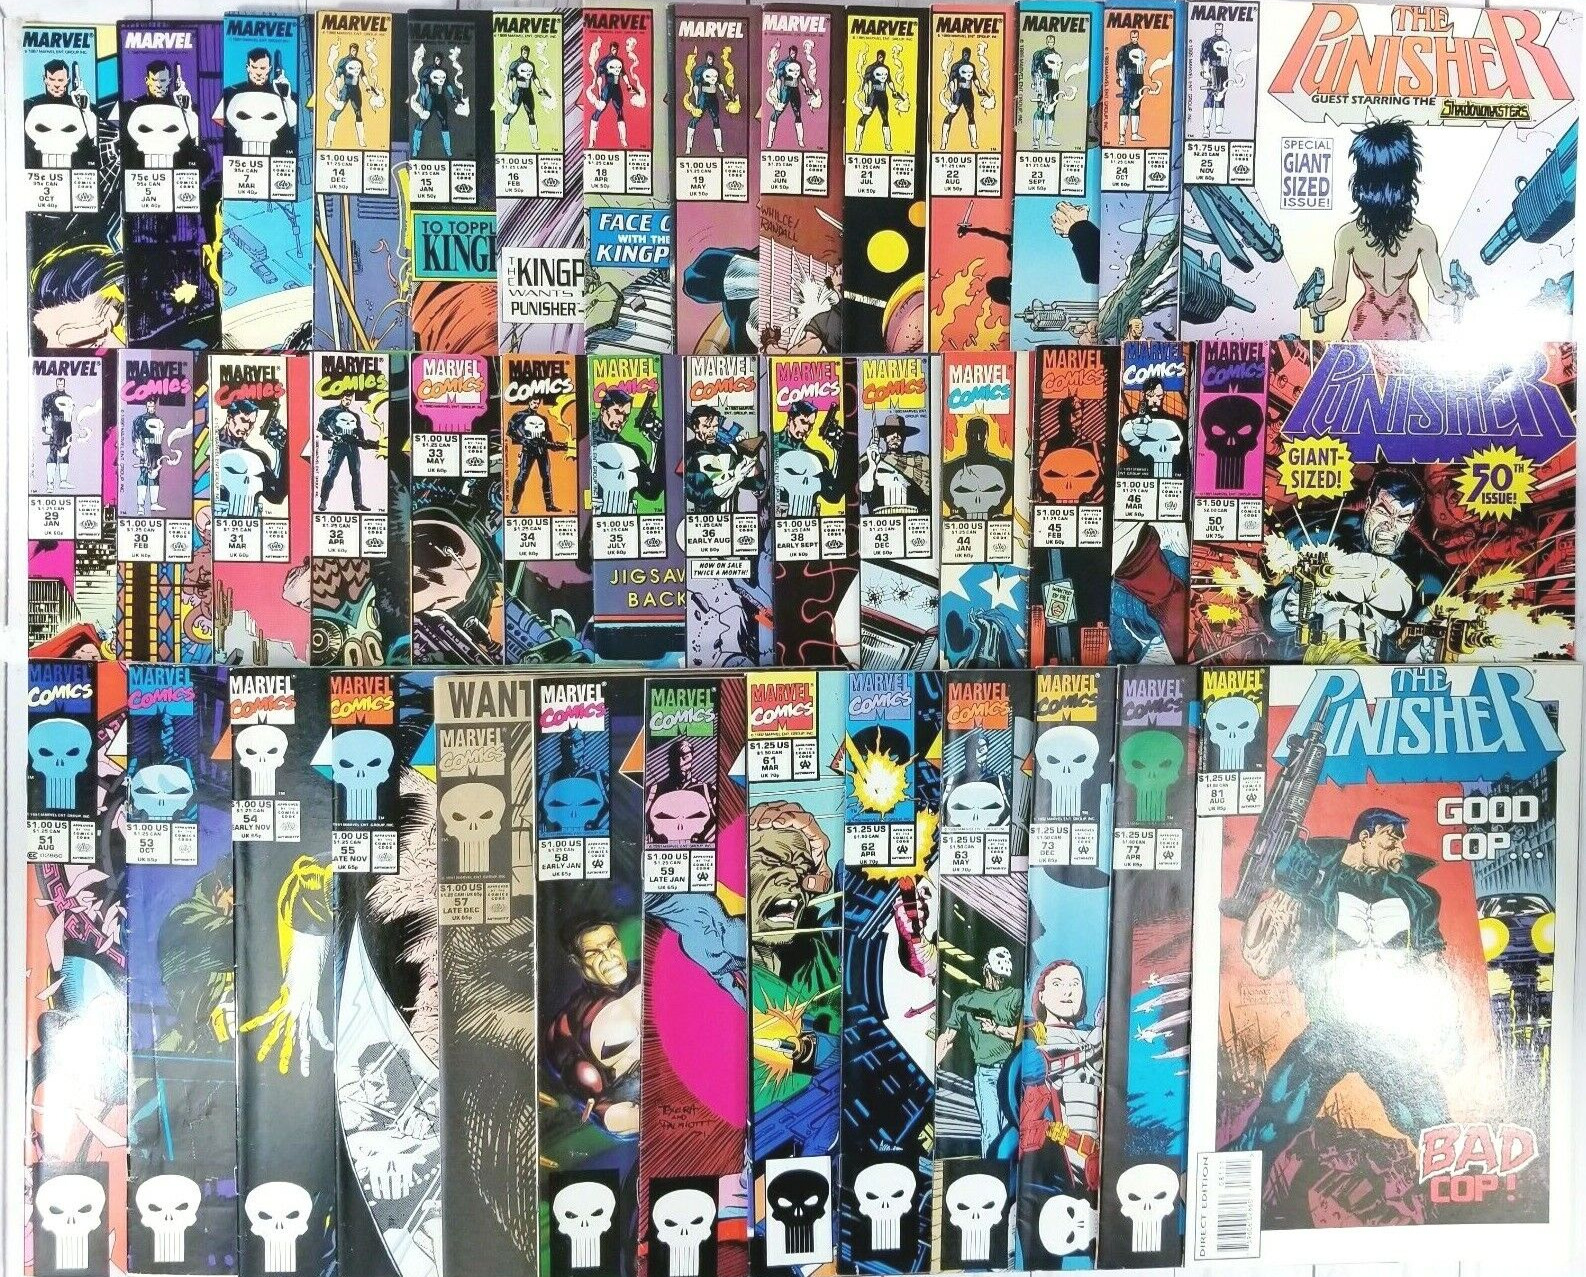 THE PUNISHER Vtg Comic Book Huge Lot 41 Issues, 1987 Marvel Comics, Frank Castle